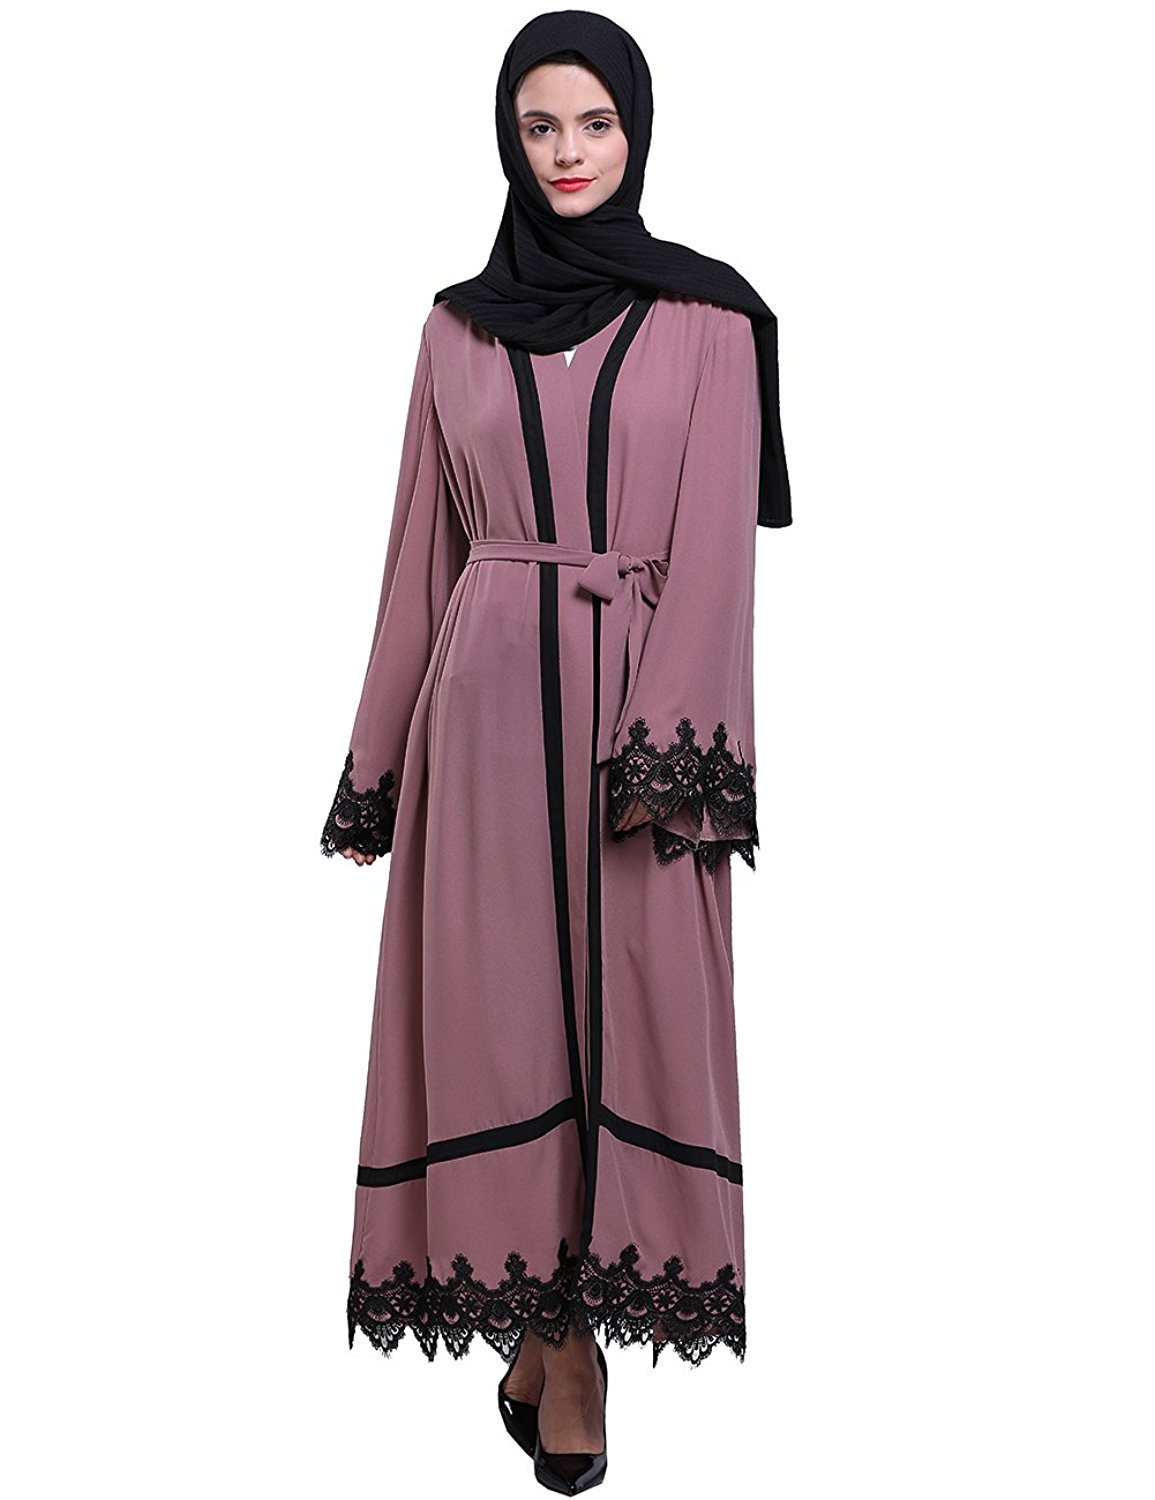 Fancyqube Women S Elegant Muslim Kaftan Dubai Islamic Abayas Long Sleeve A Line Maxi Dress